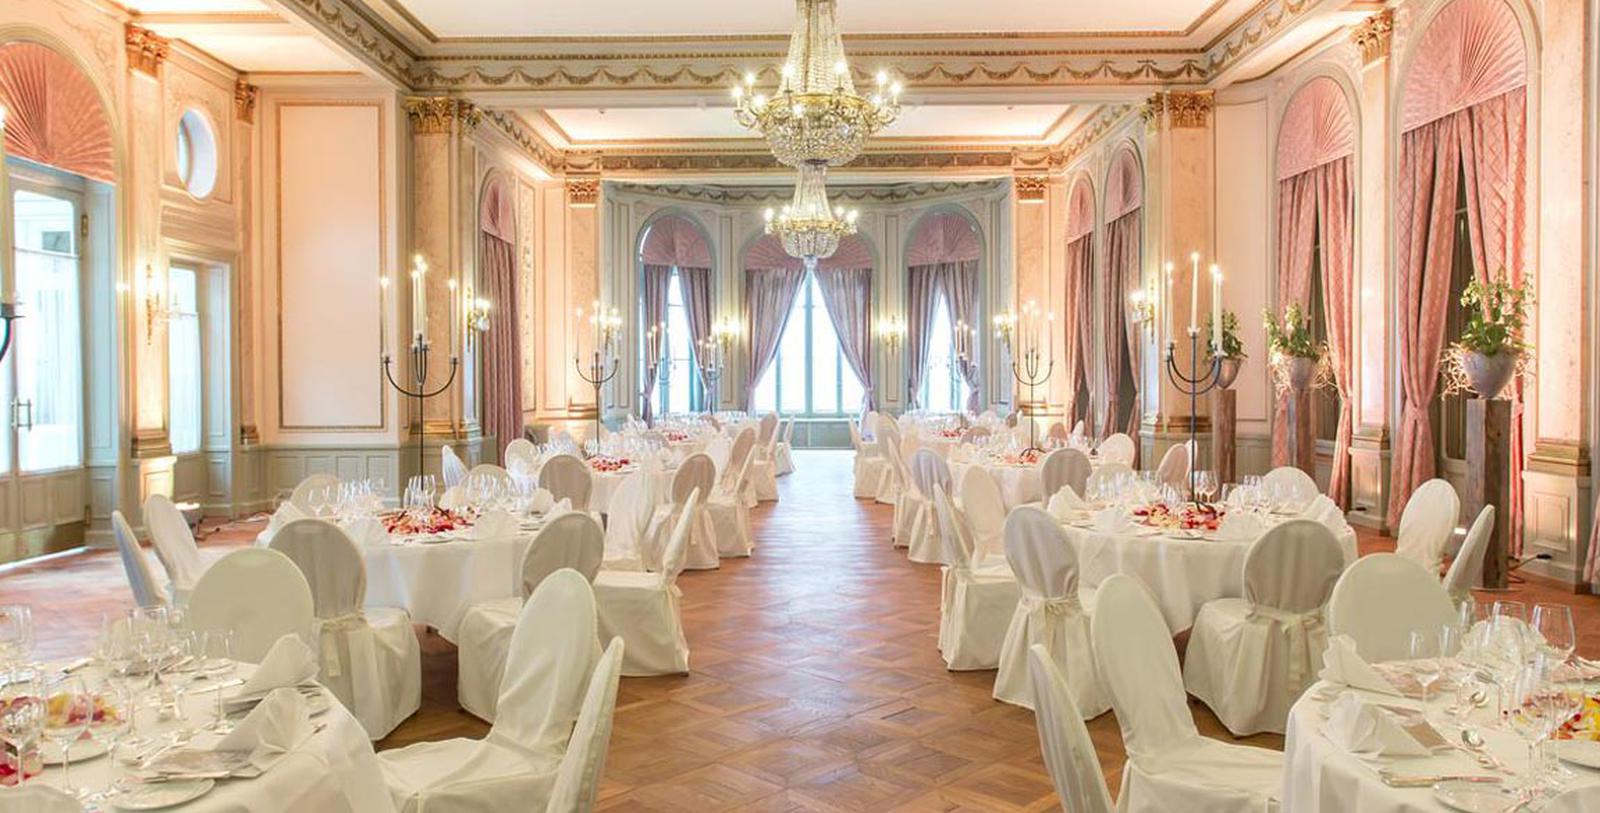 Image of Bringolfsaal Hall, Hotel Schweizerhof Luzern, Switzerland, 1845, Member of Historic Hotels Worldwide, Special Occasions